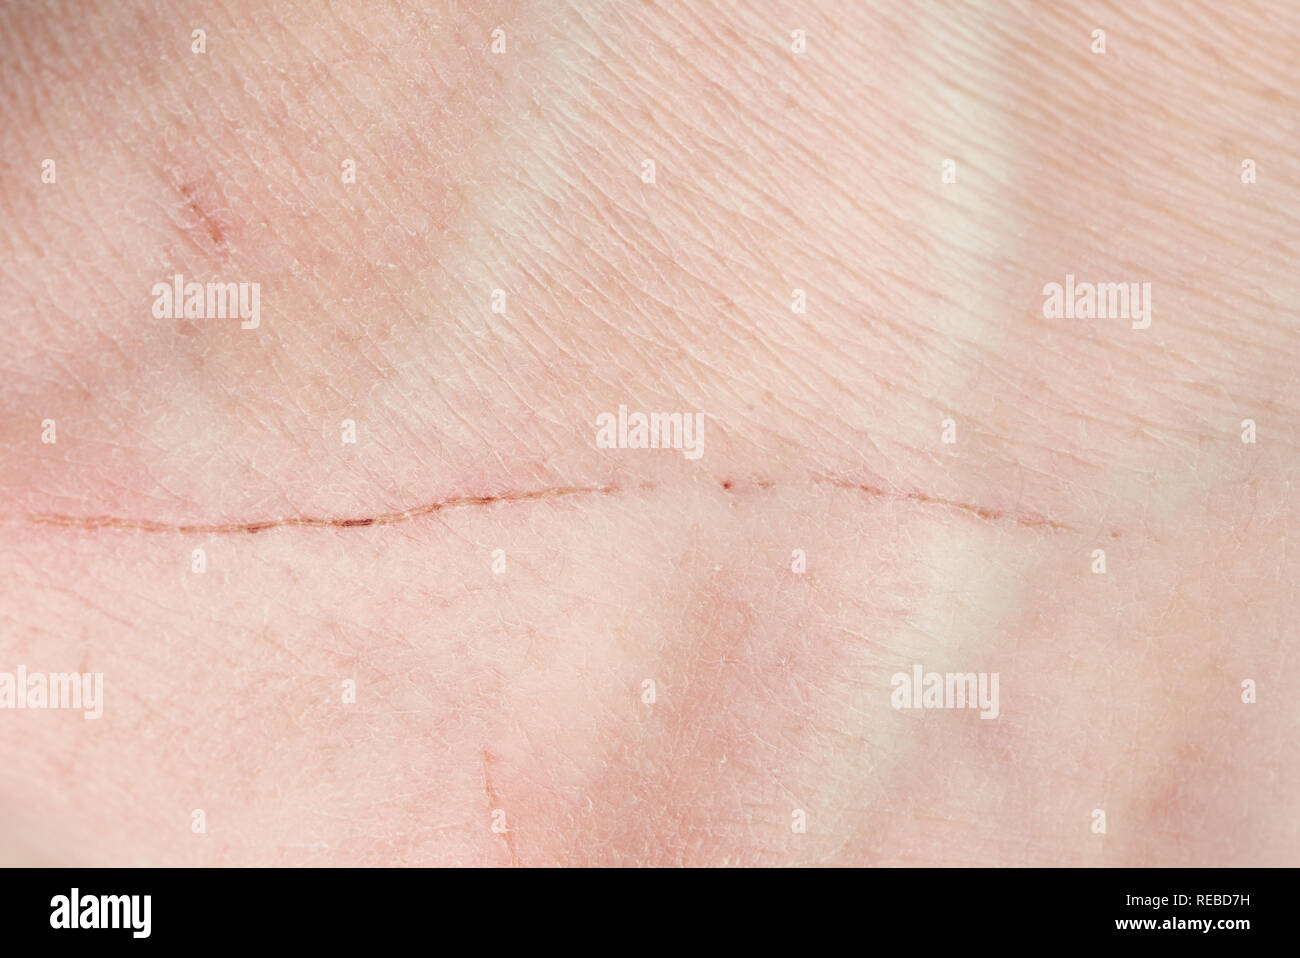 Scratch on human skin close up. Long cut on human skin Stock Photo